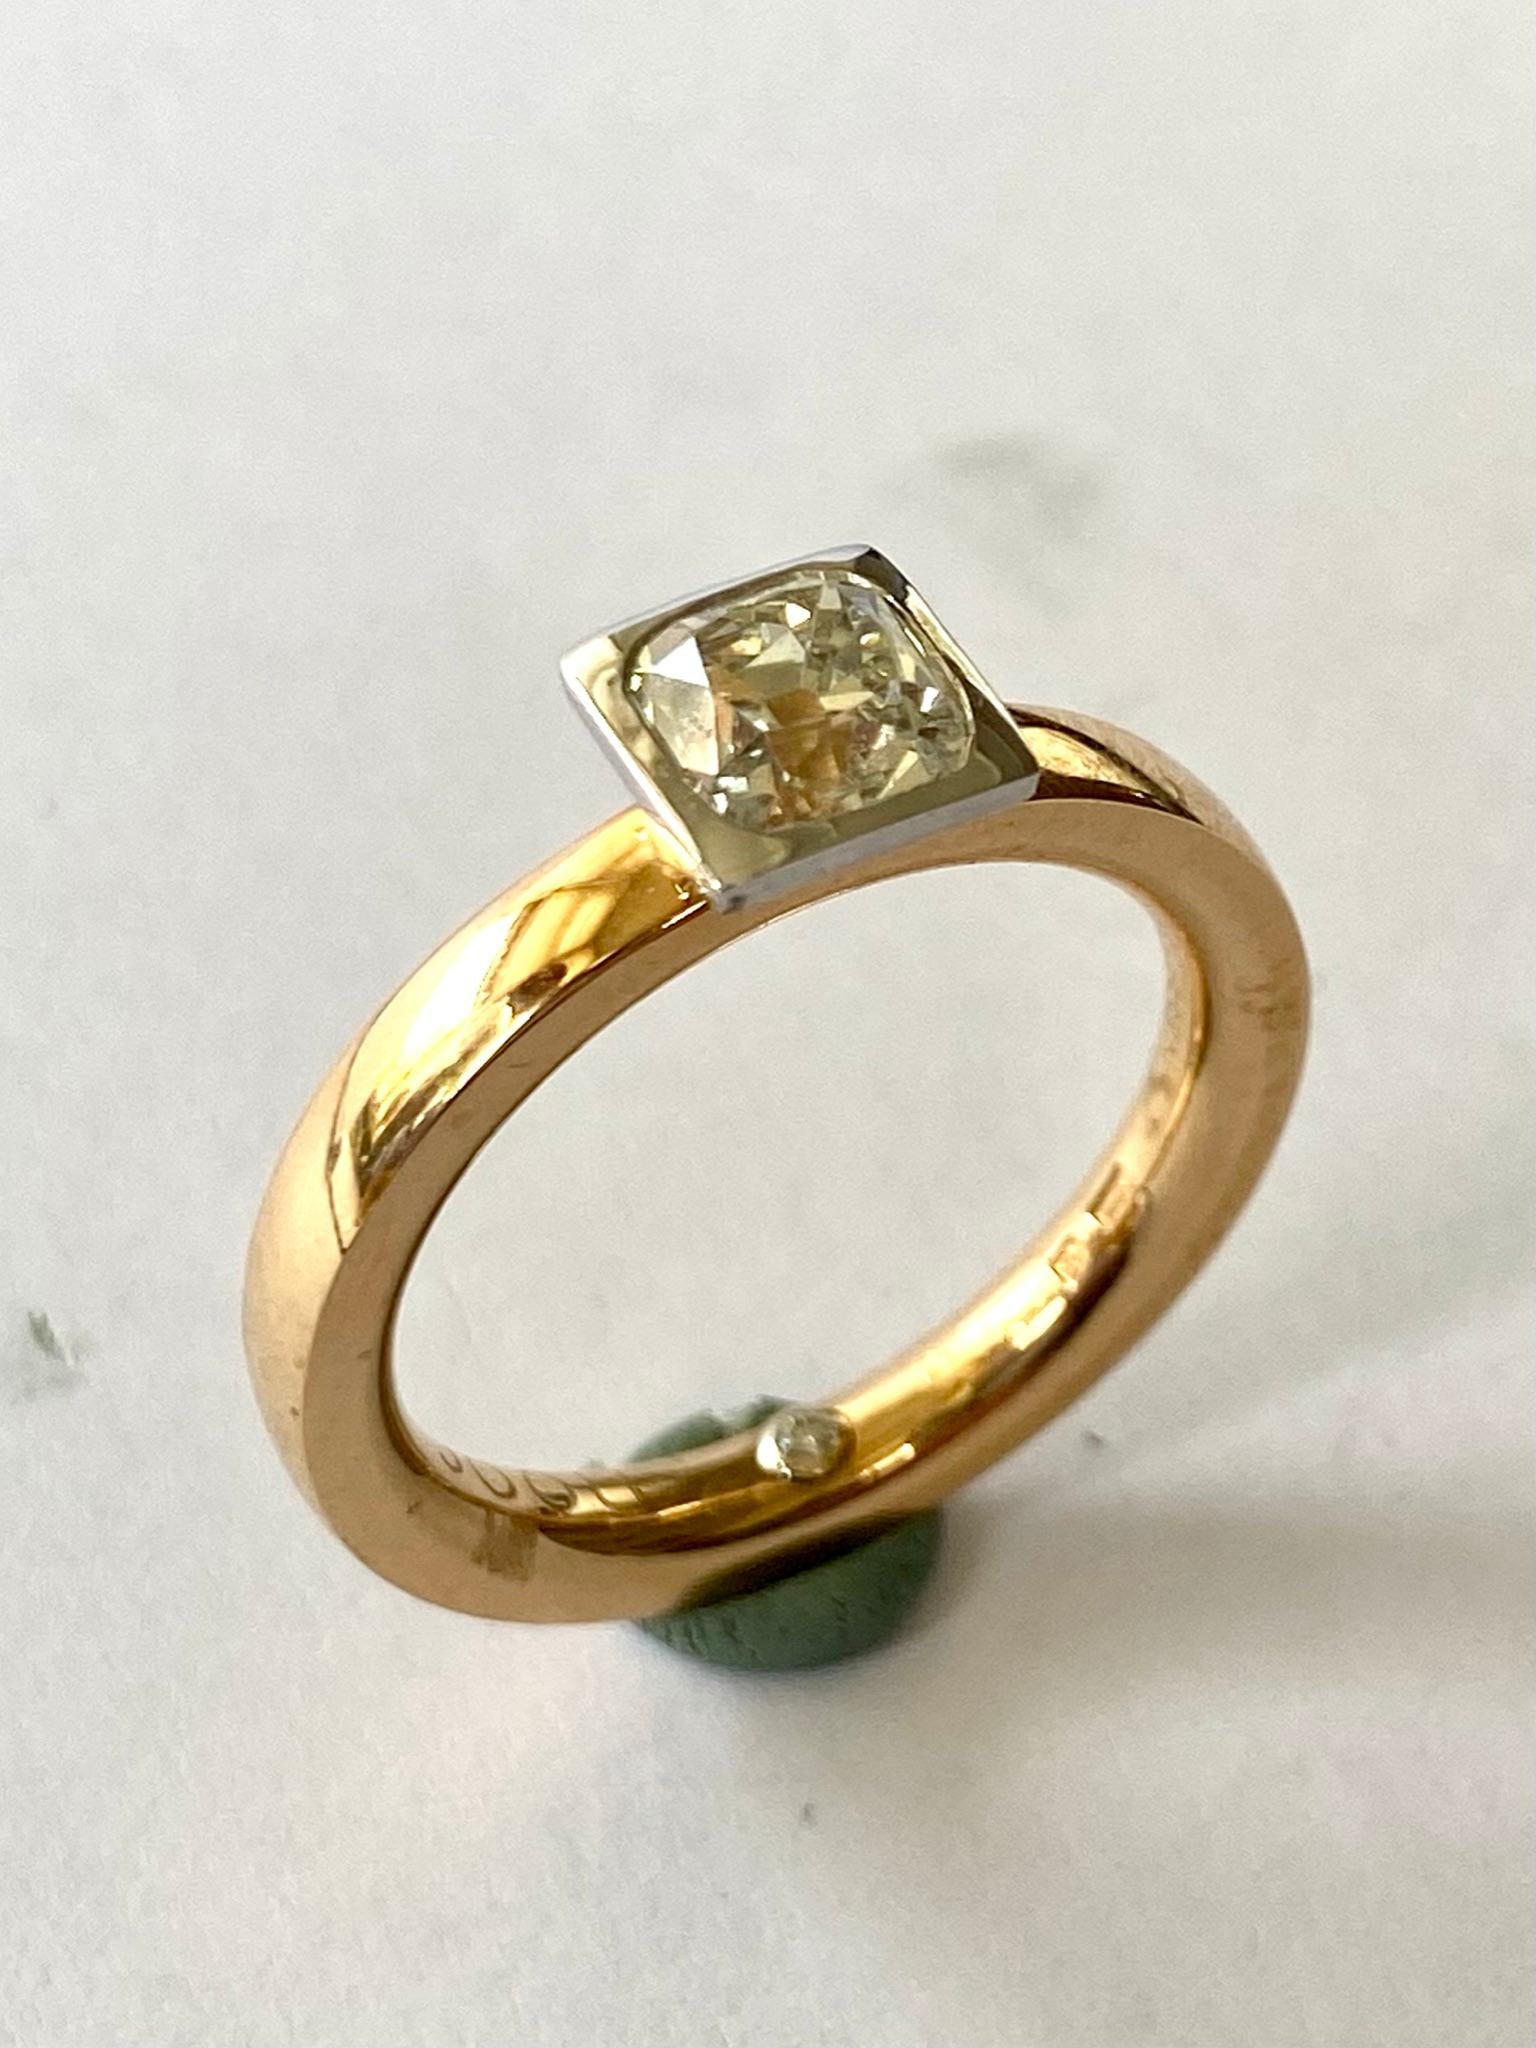 20.03 carat emerald cut diamond ring